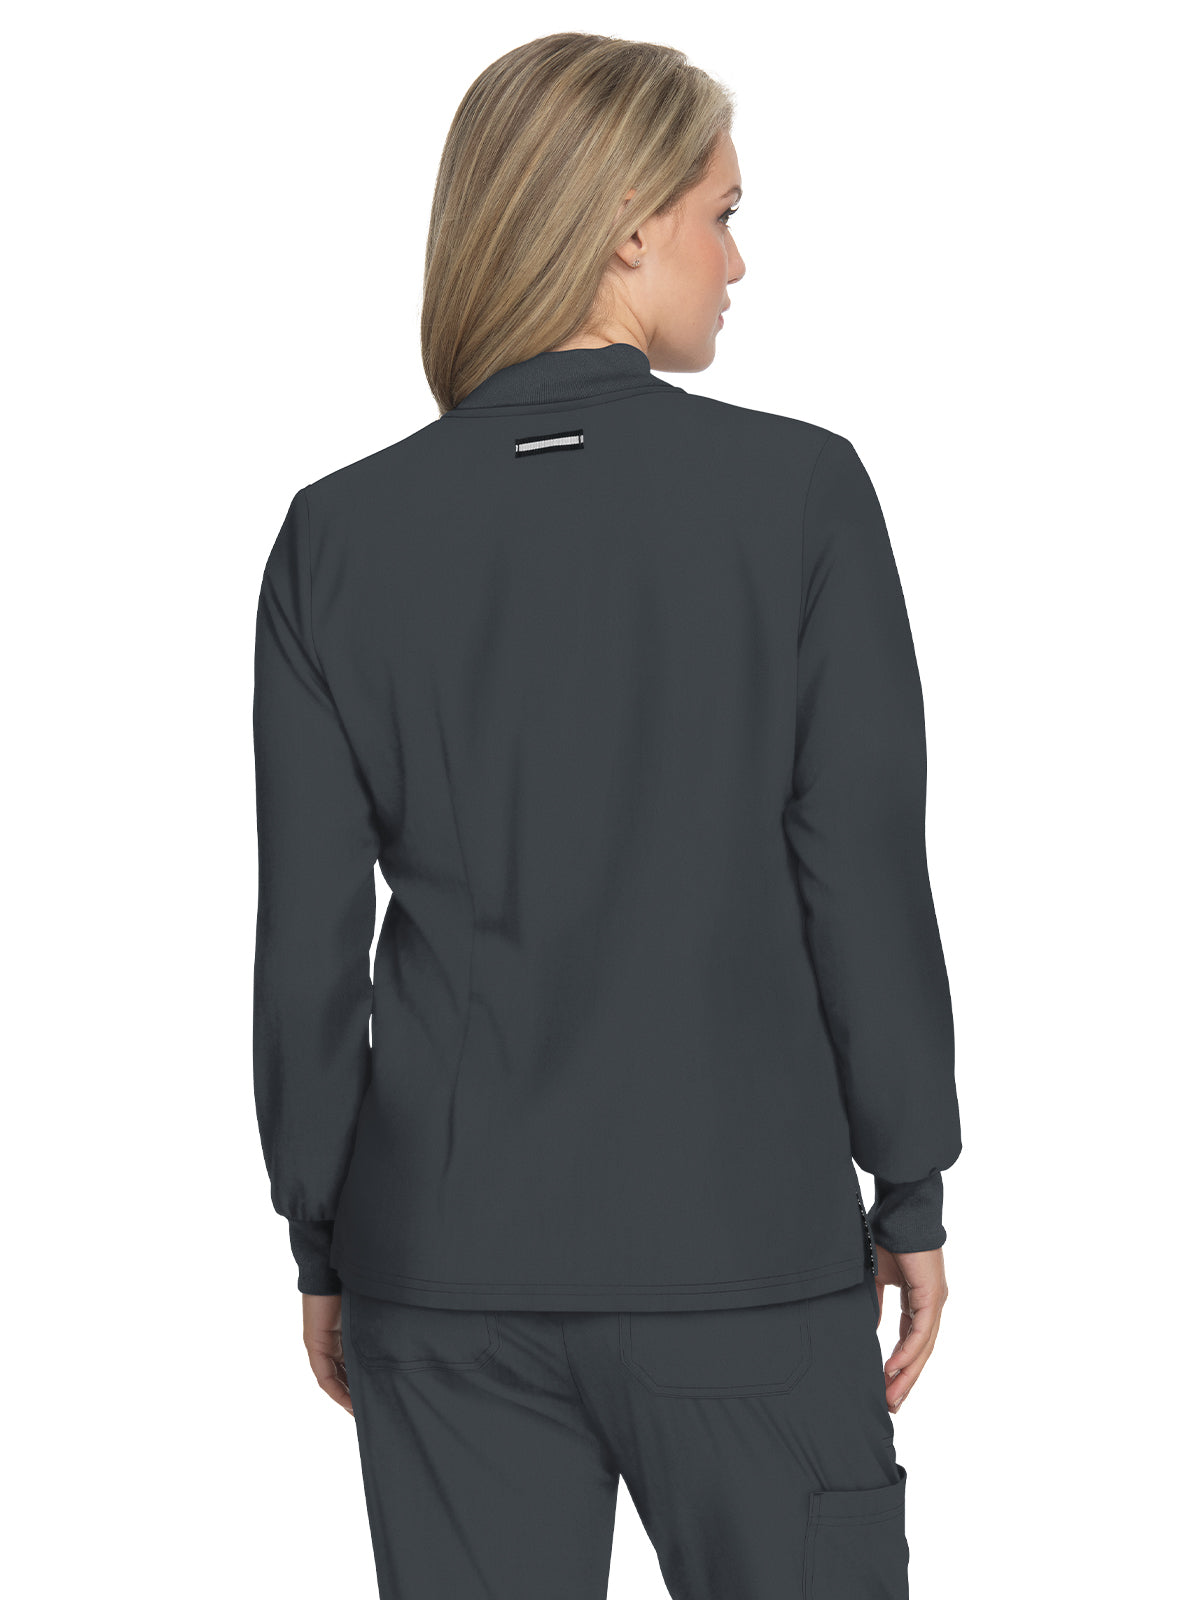 Women's Zipper Front Scrub Jacket